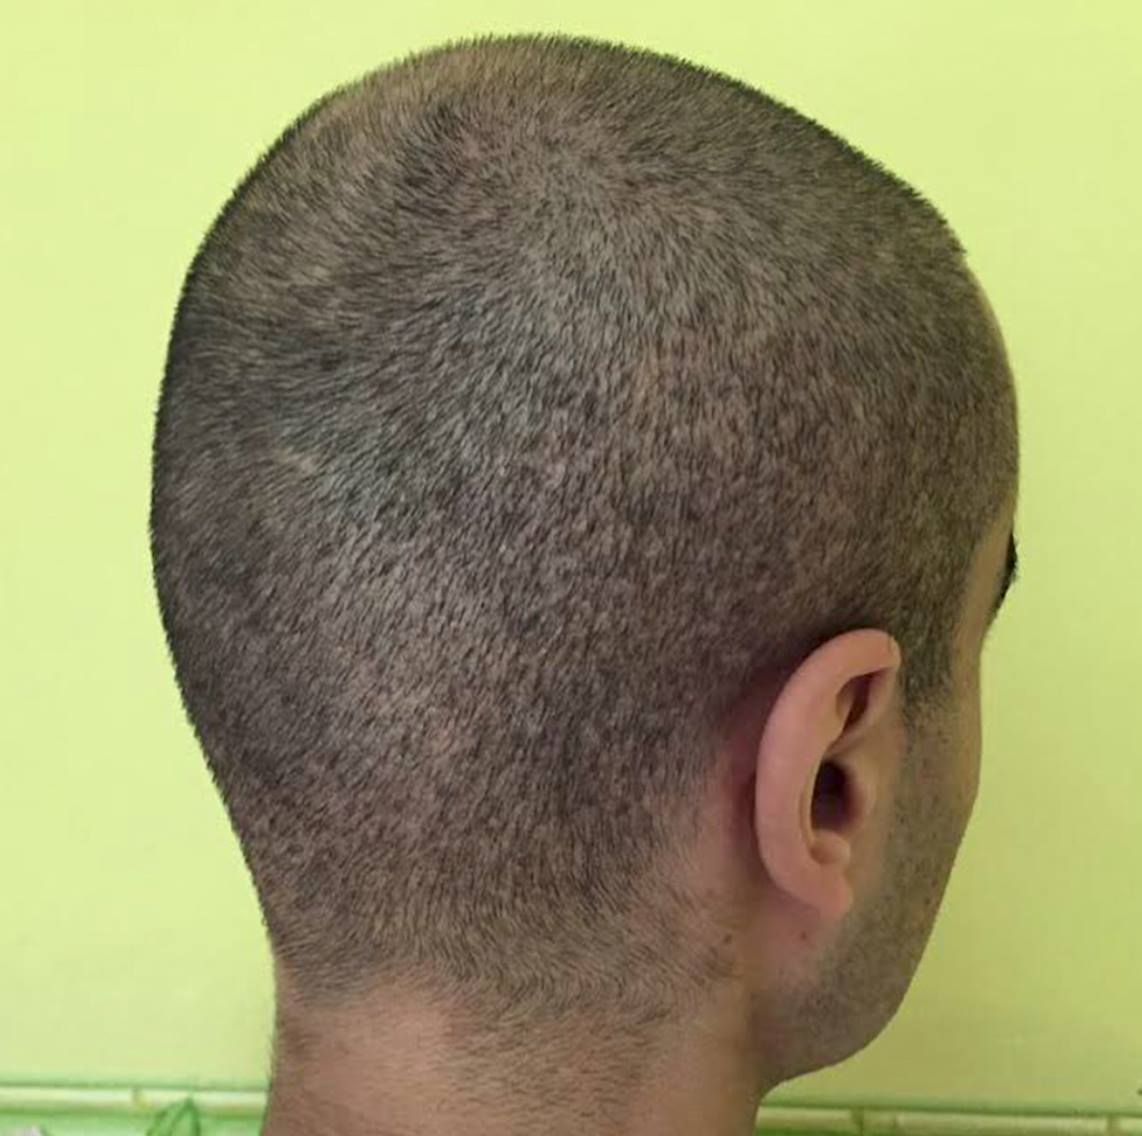 Result of scalp pigmentation after botched FUE